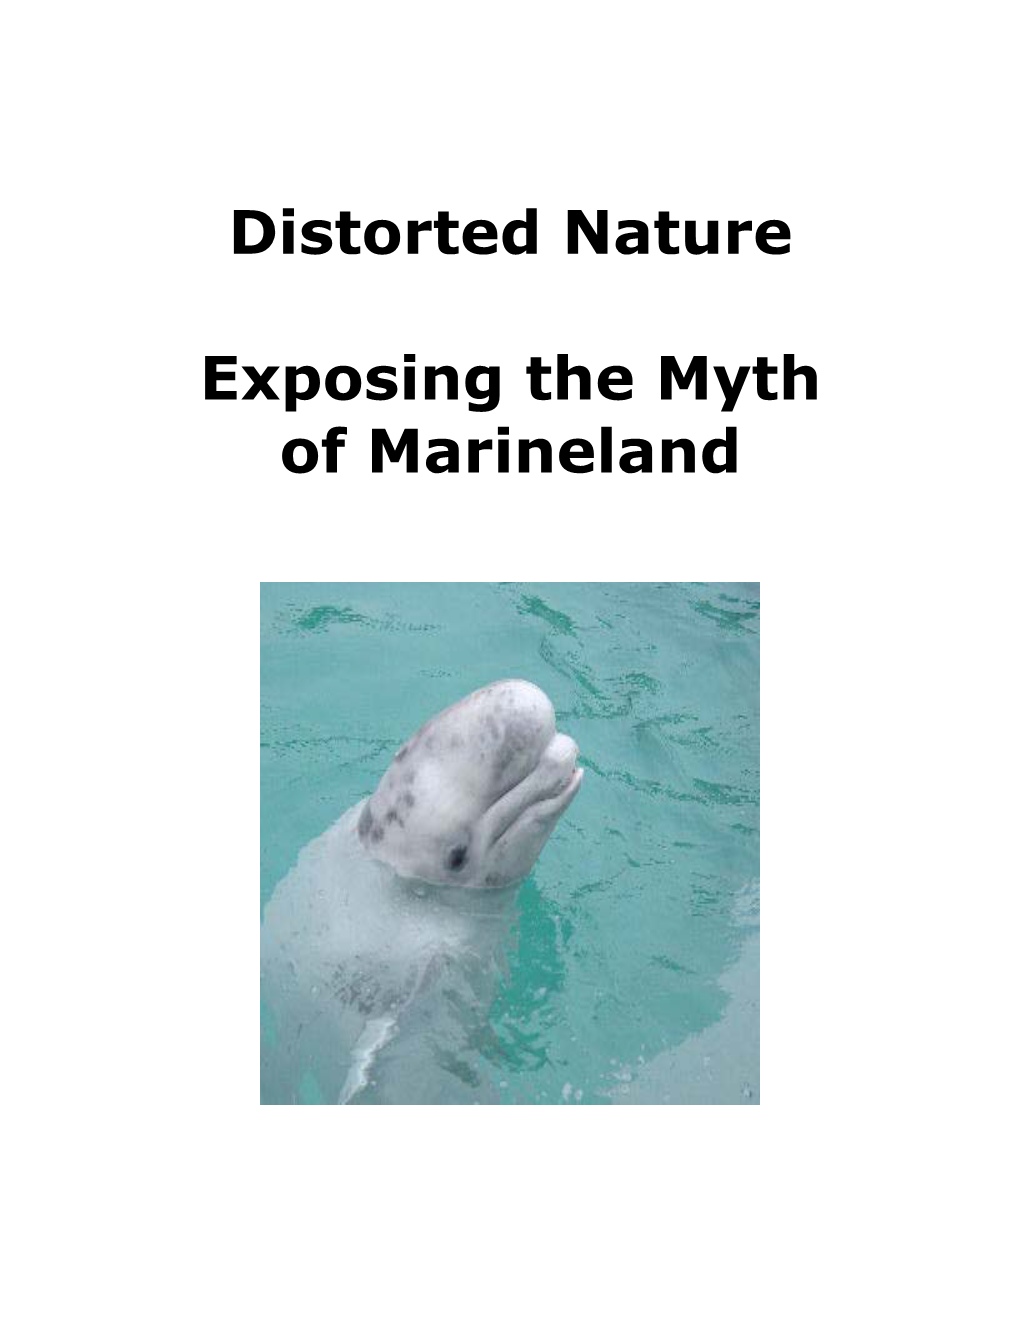 Distorted Nature, Exposing the Myth of Marineland